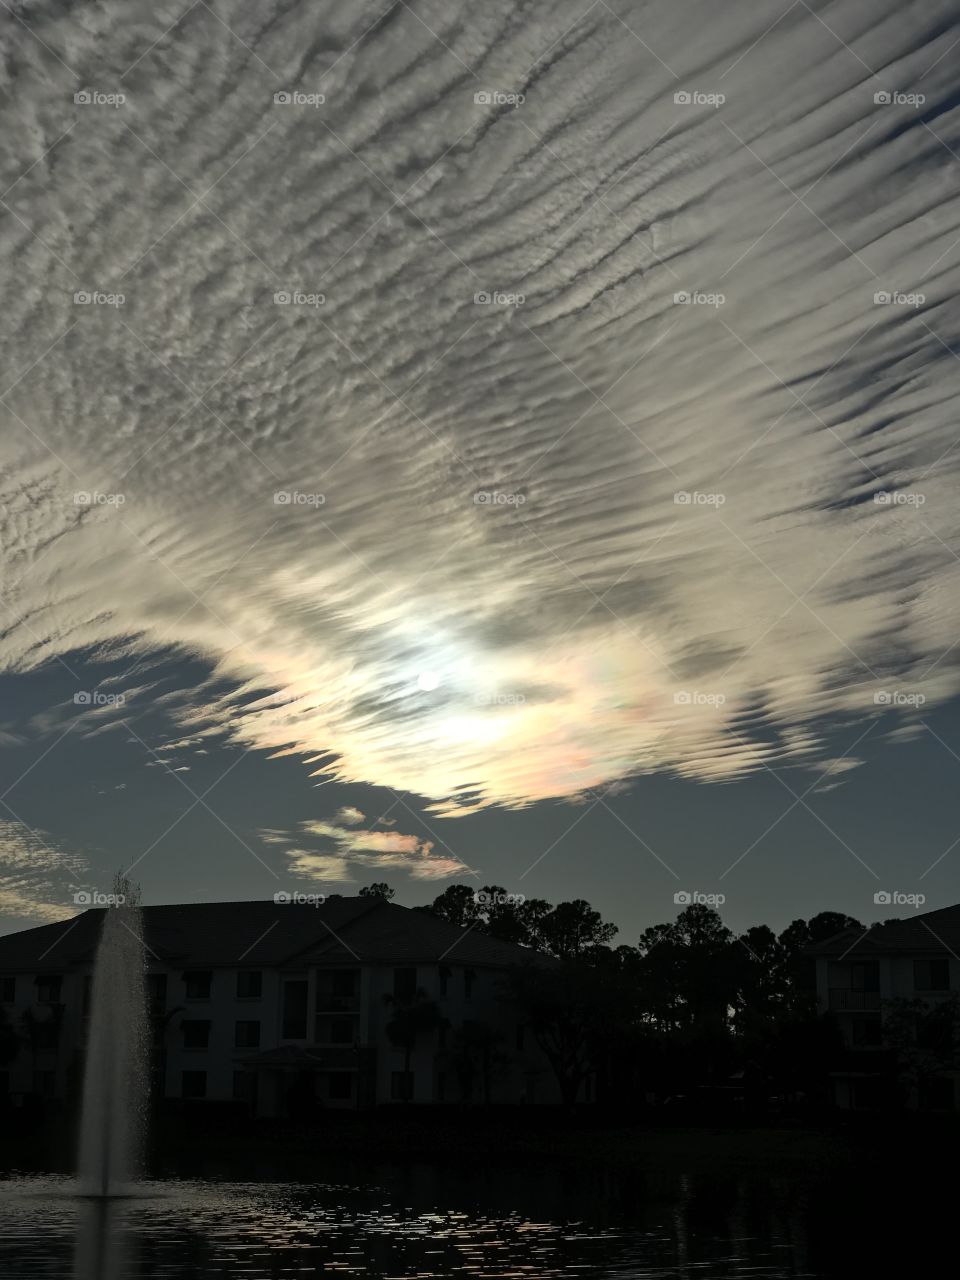 Florida winter sky